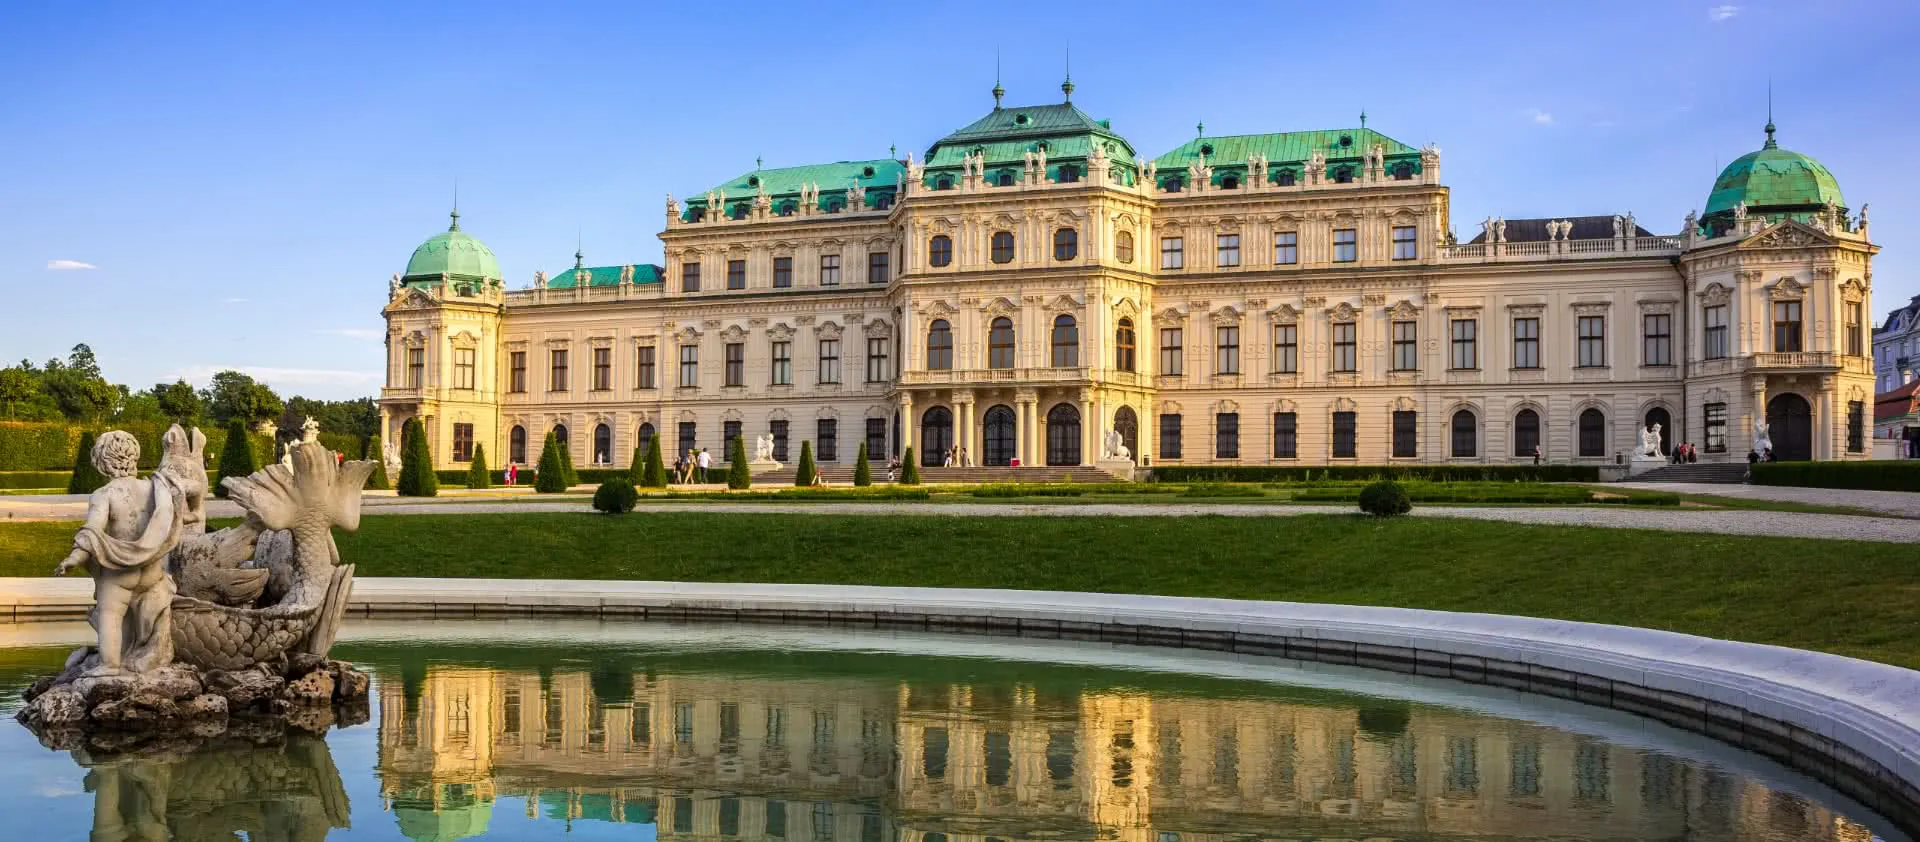 Vienna - the destination for school trips